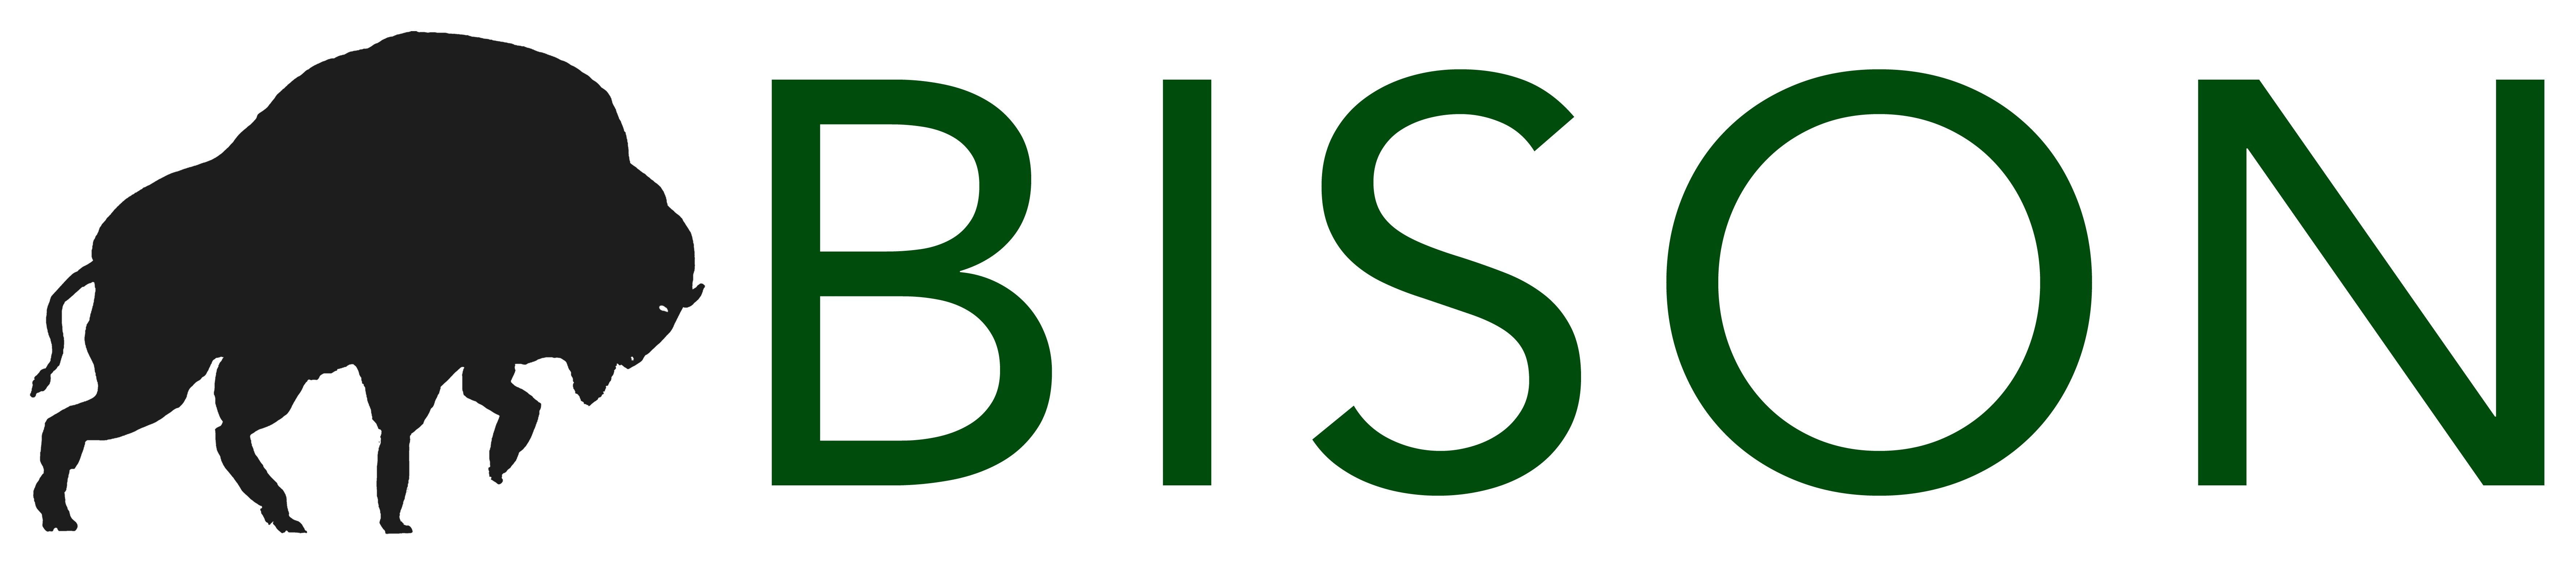 Bison Logo Graphic PNG image